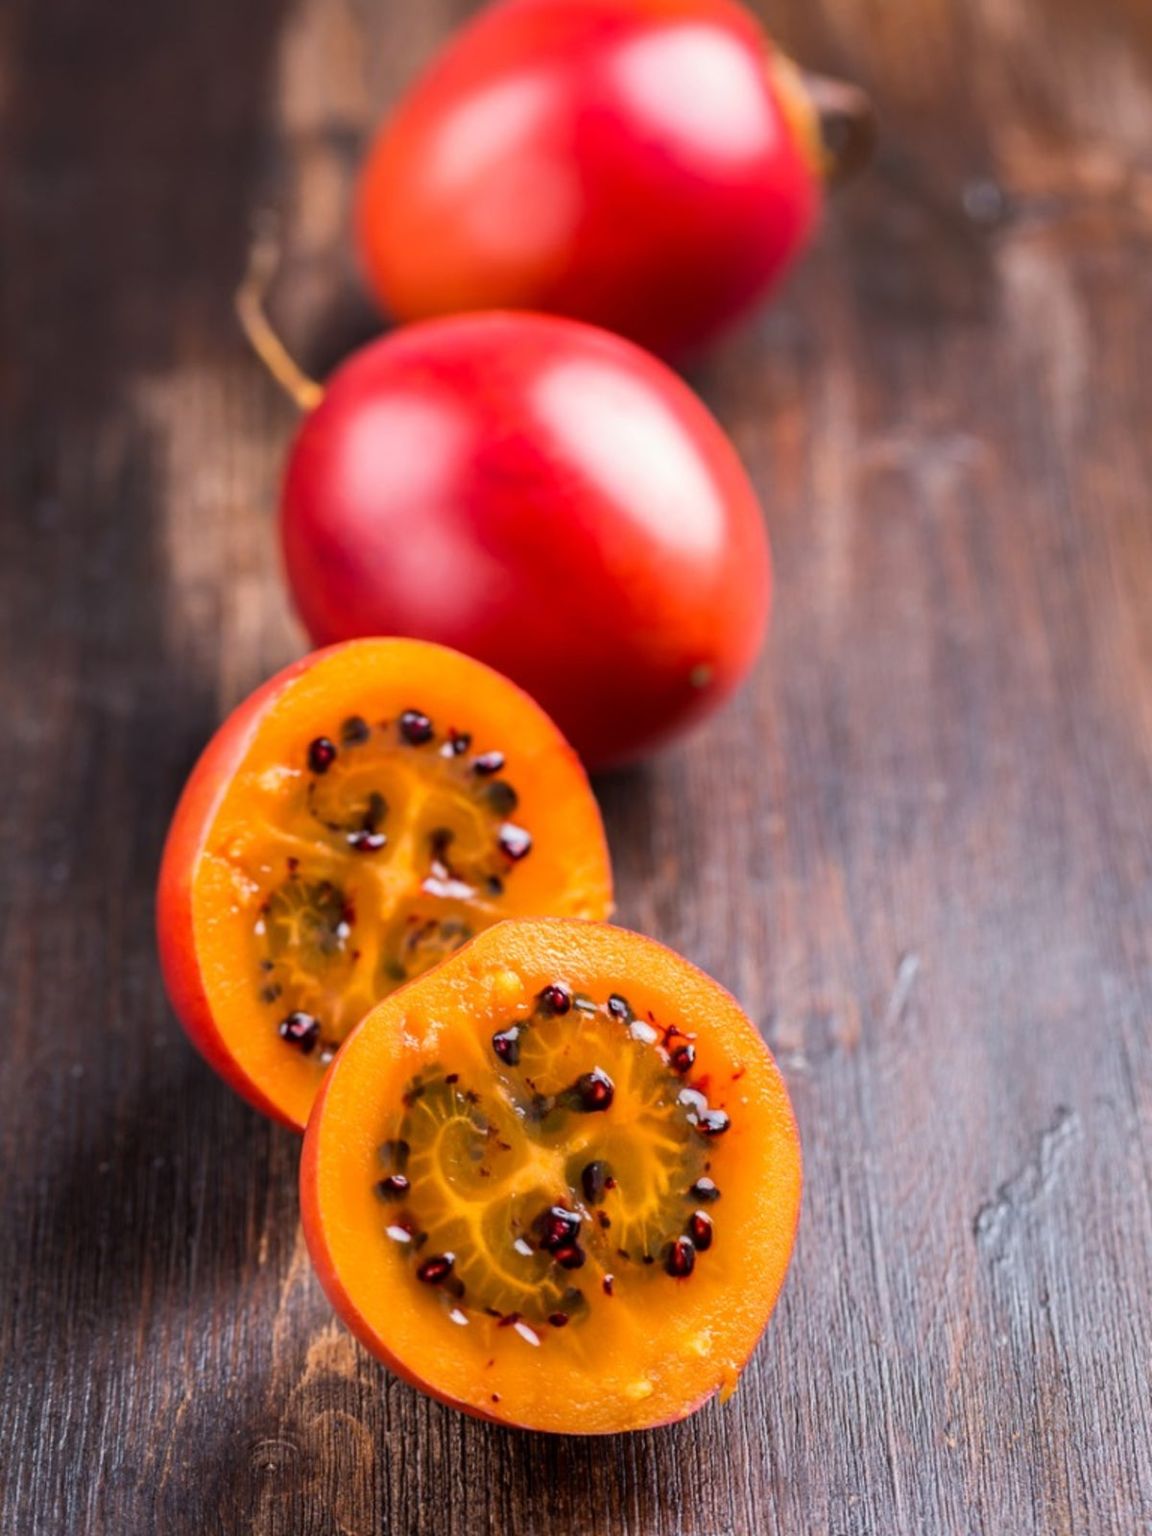 Tamarillo Tomato Tree Care - Information On Growing Tree Tomatoes